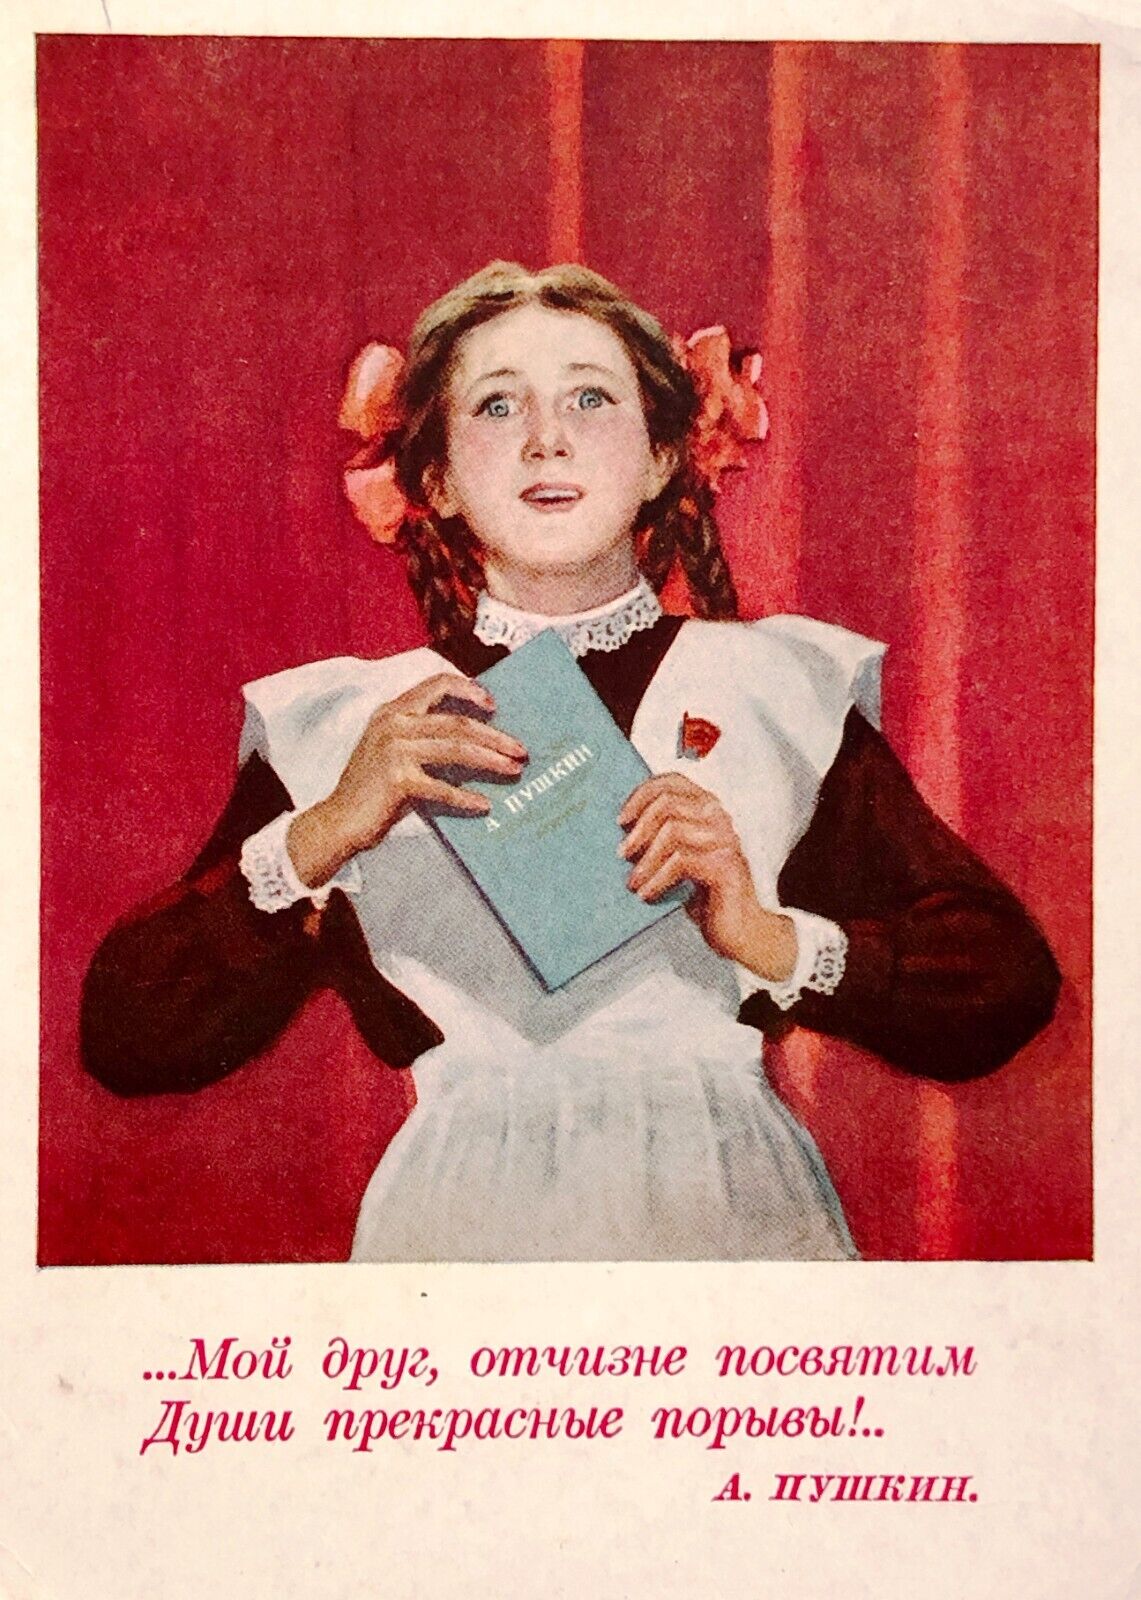 1957 Rare Soviet Schoolgirl Pioneer Pushkin\'s book Propaganda Postcard